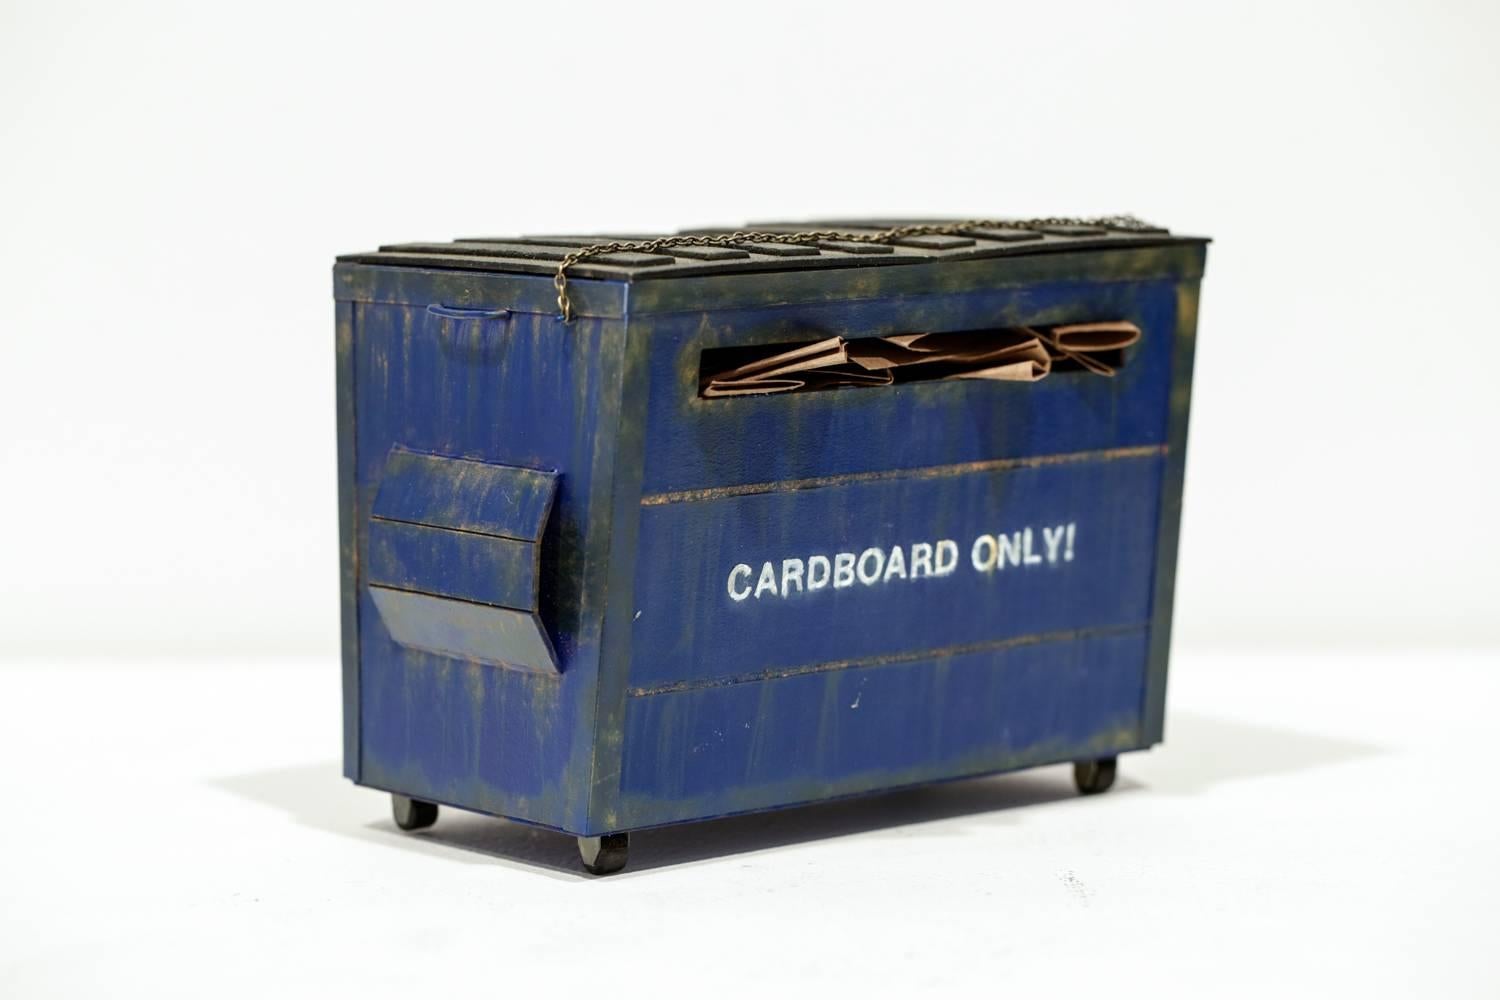 Drew Leshko Figurative Sculpture - Cardboard Only Dumpster